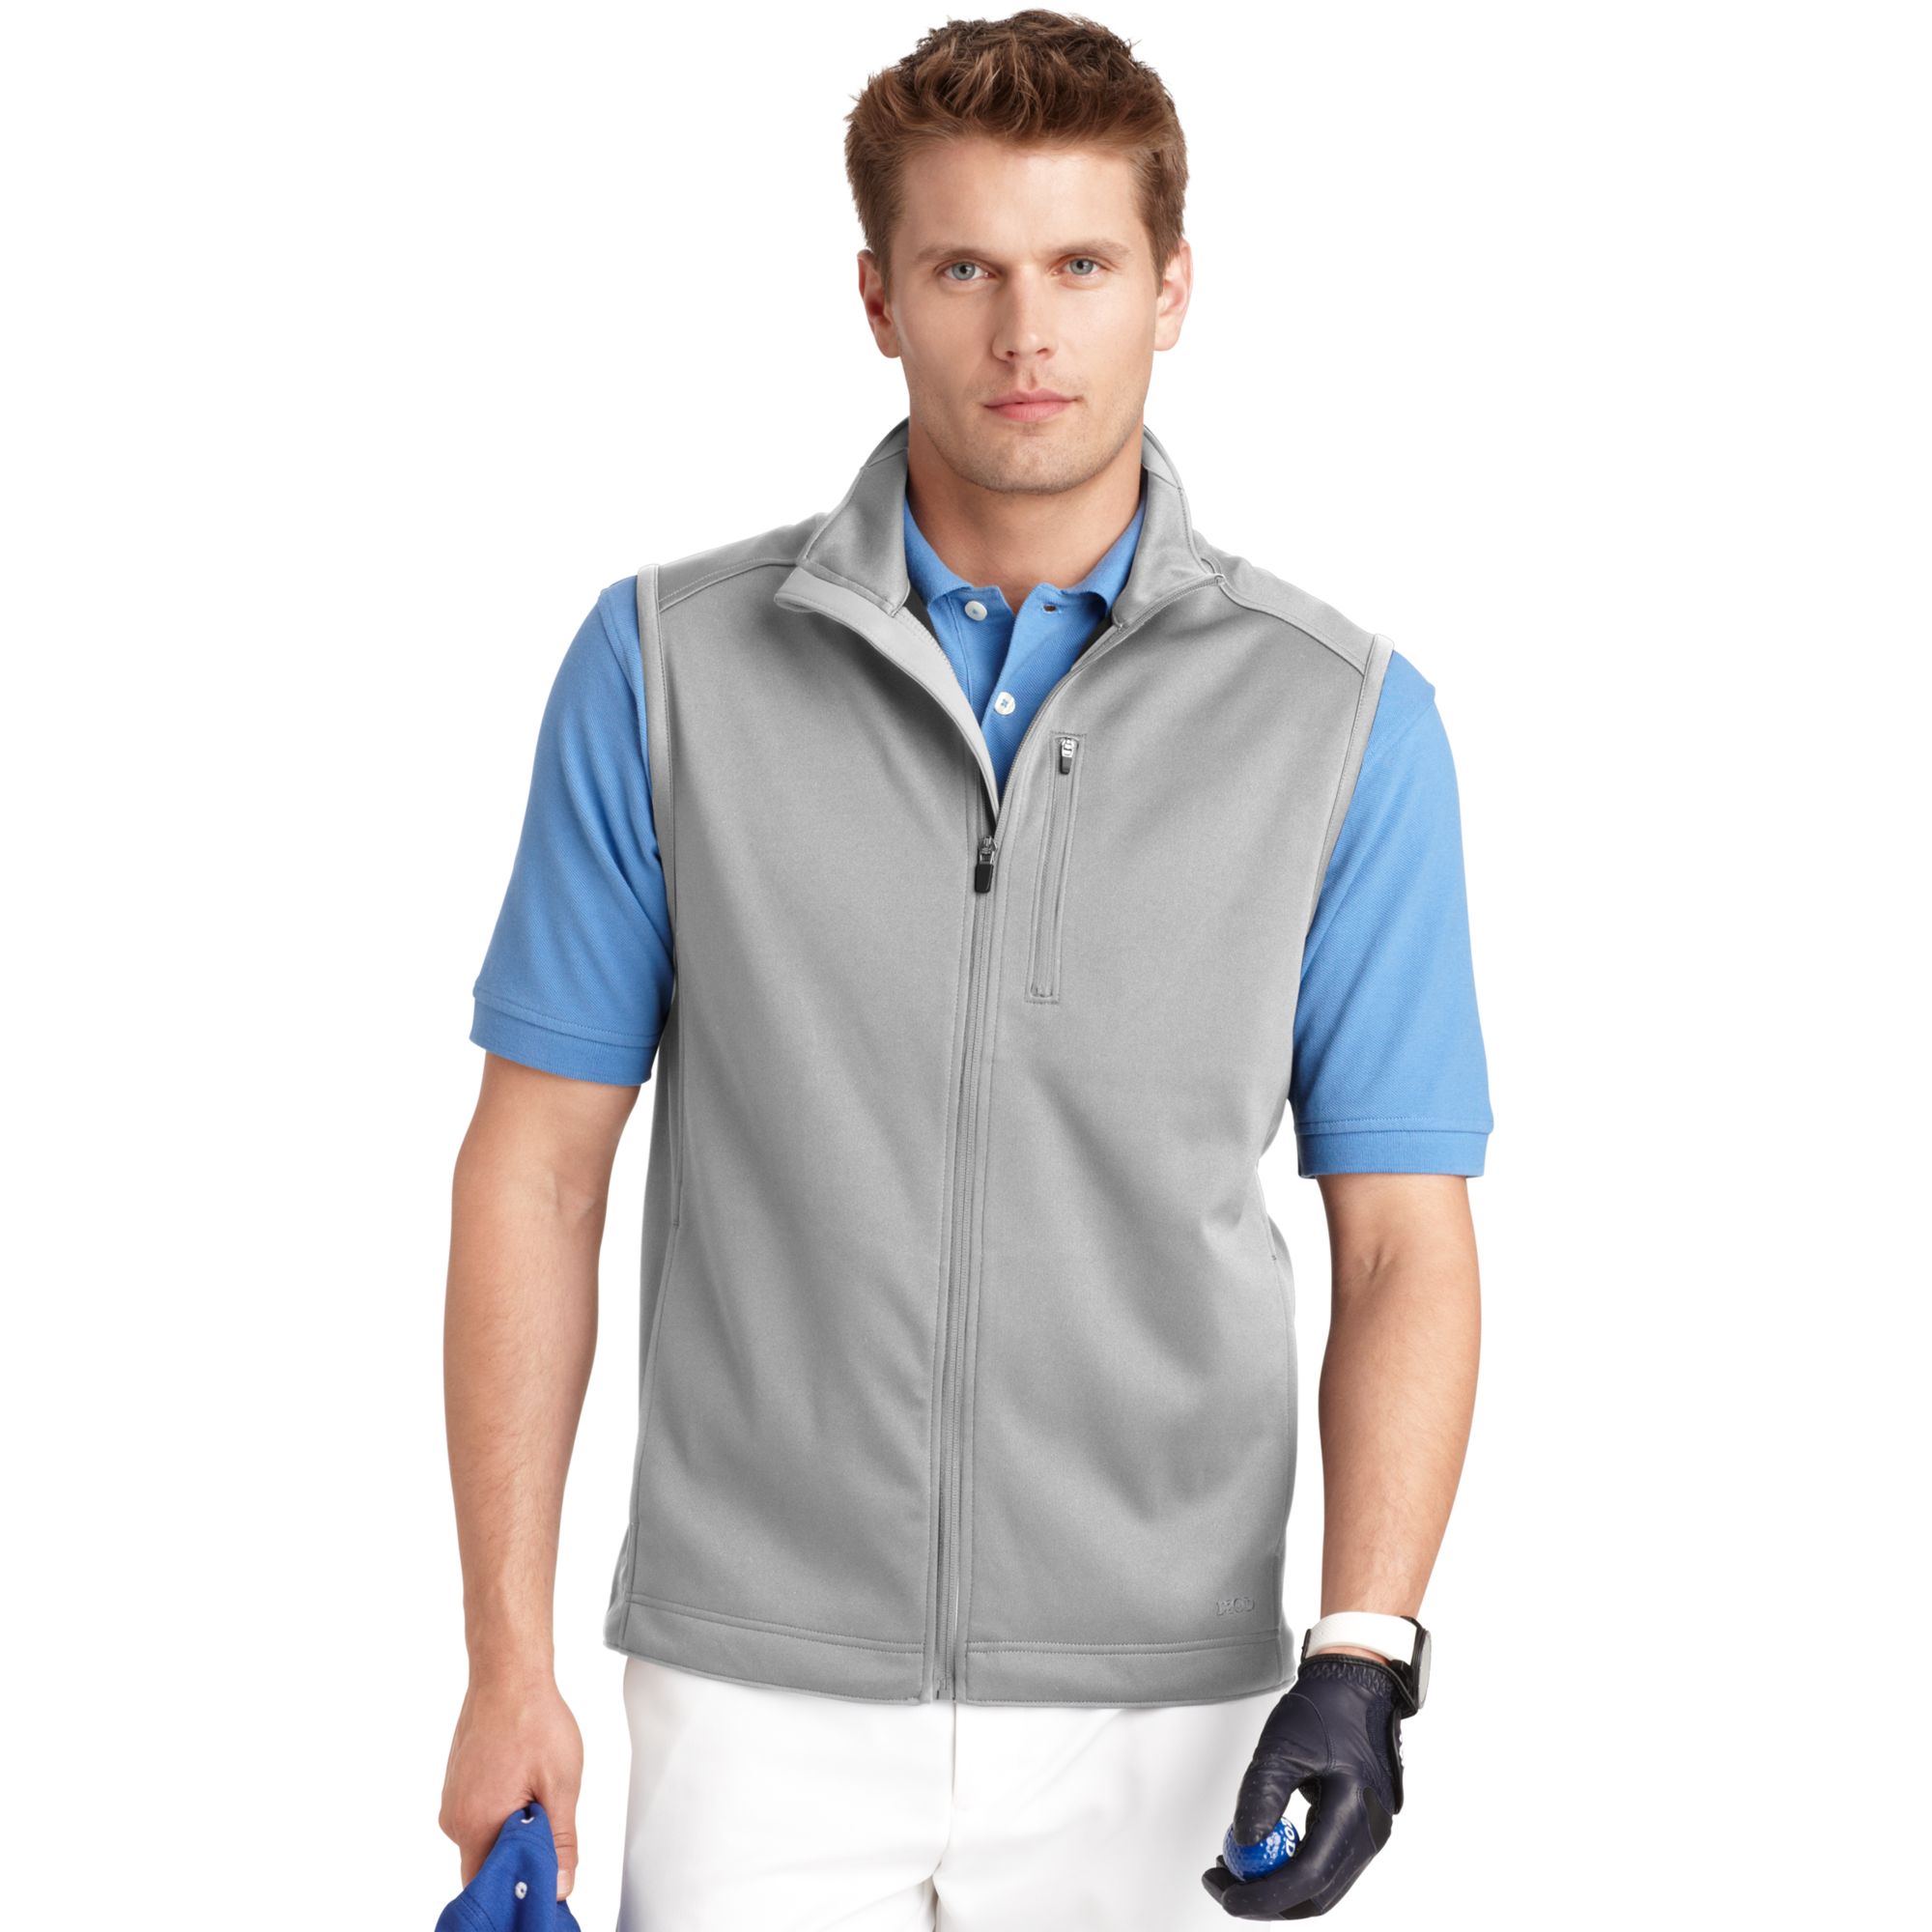 Lyst - Izod Izod Golf Vest Zipfront Interlock Performance Vest in Gray ...